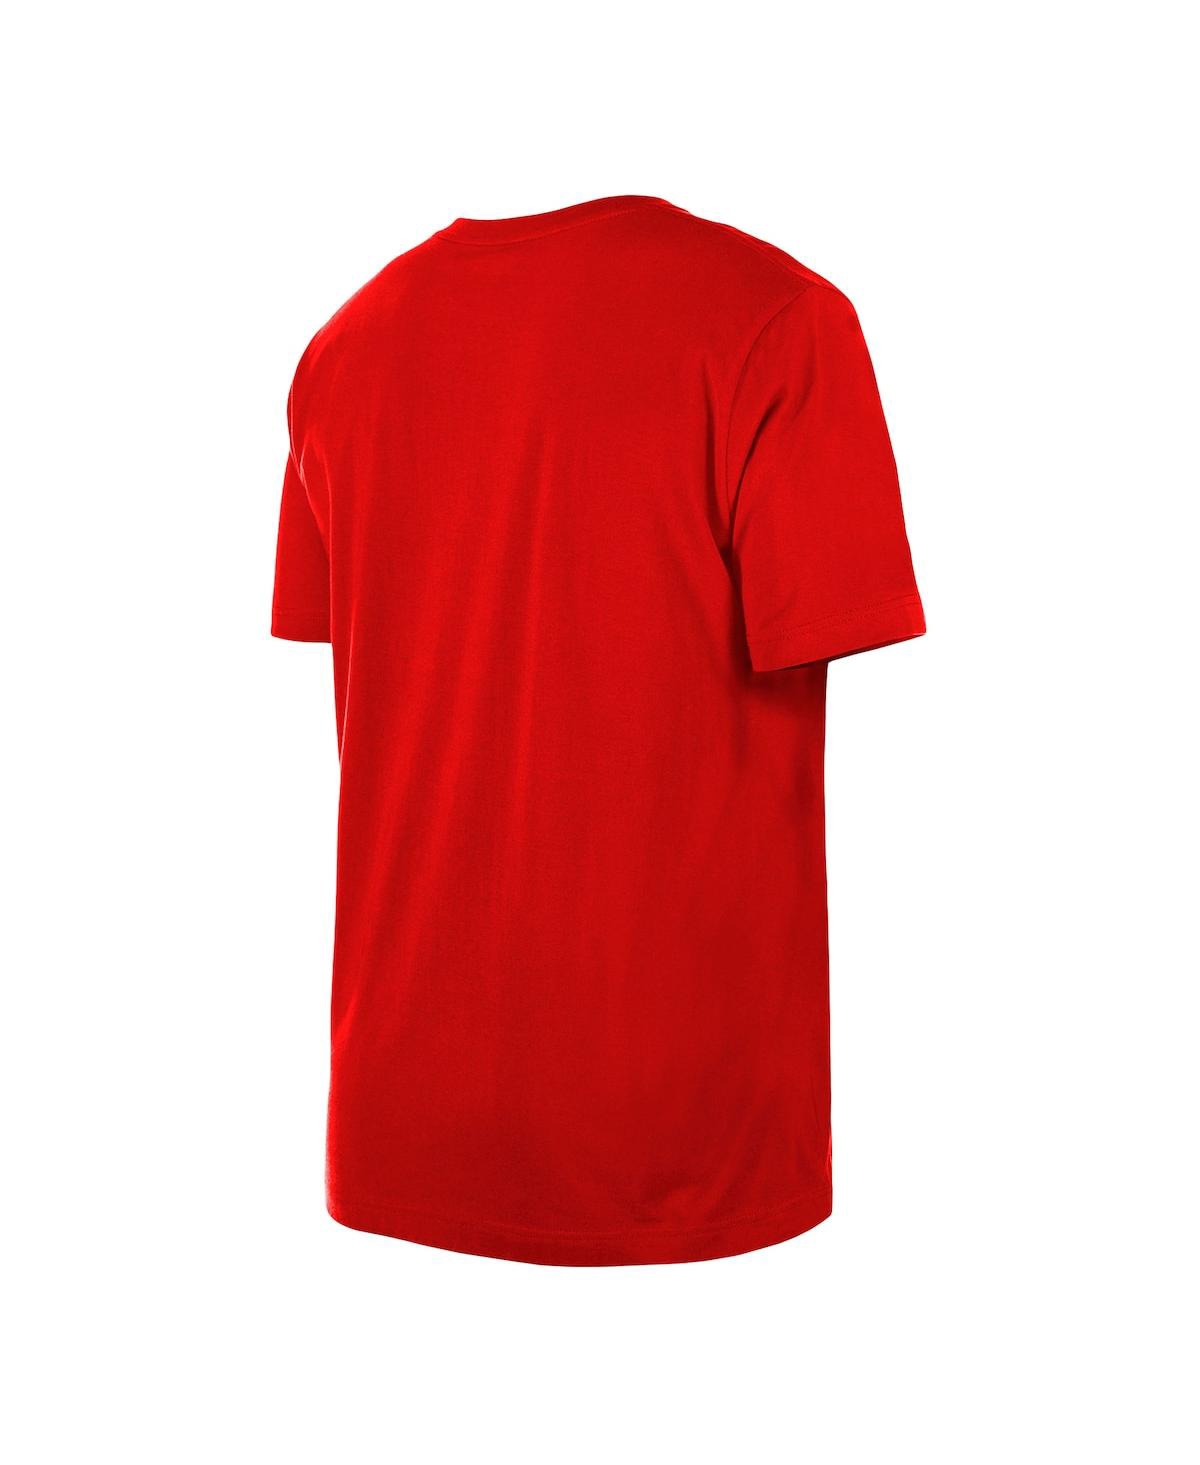 Shop New Era Men's  Red Washington Nationals Batting Practice T-shirt